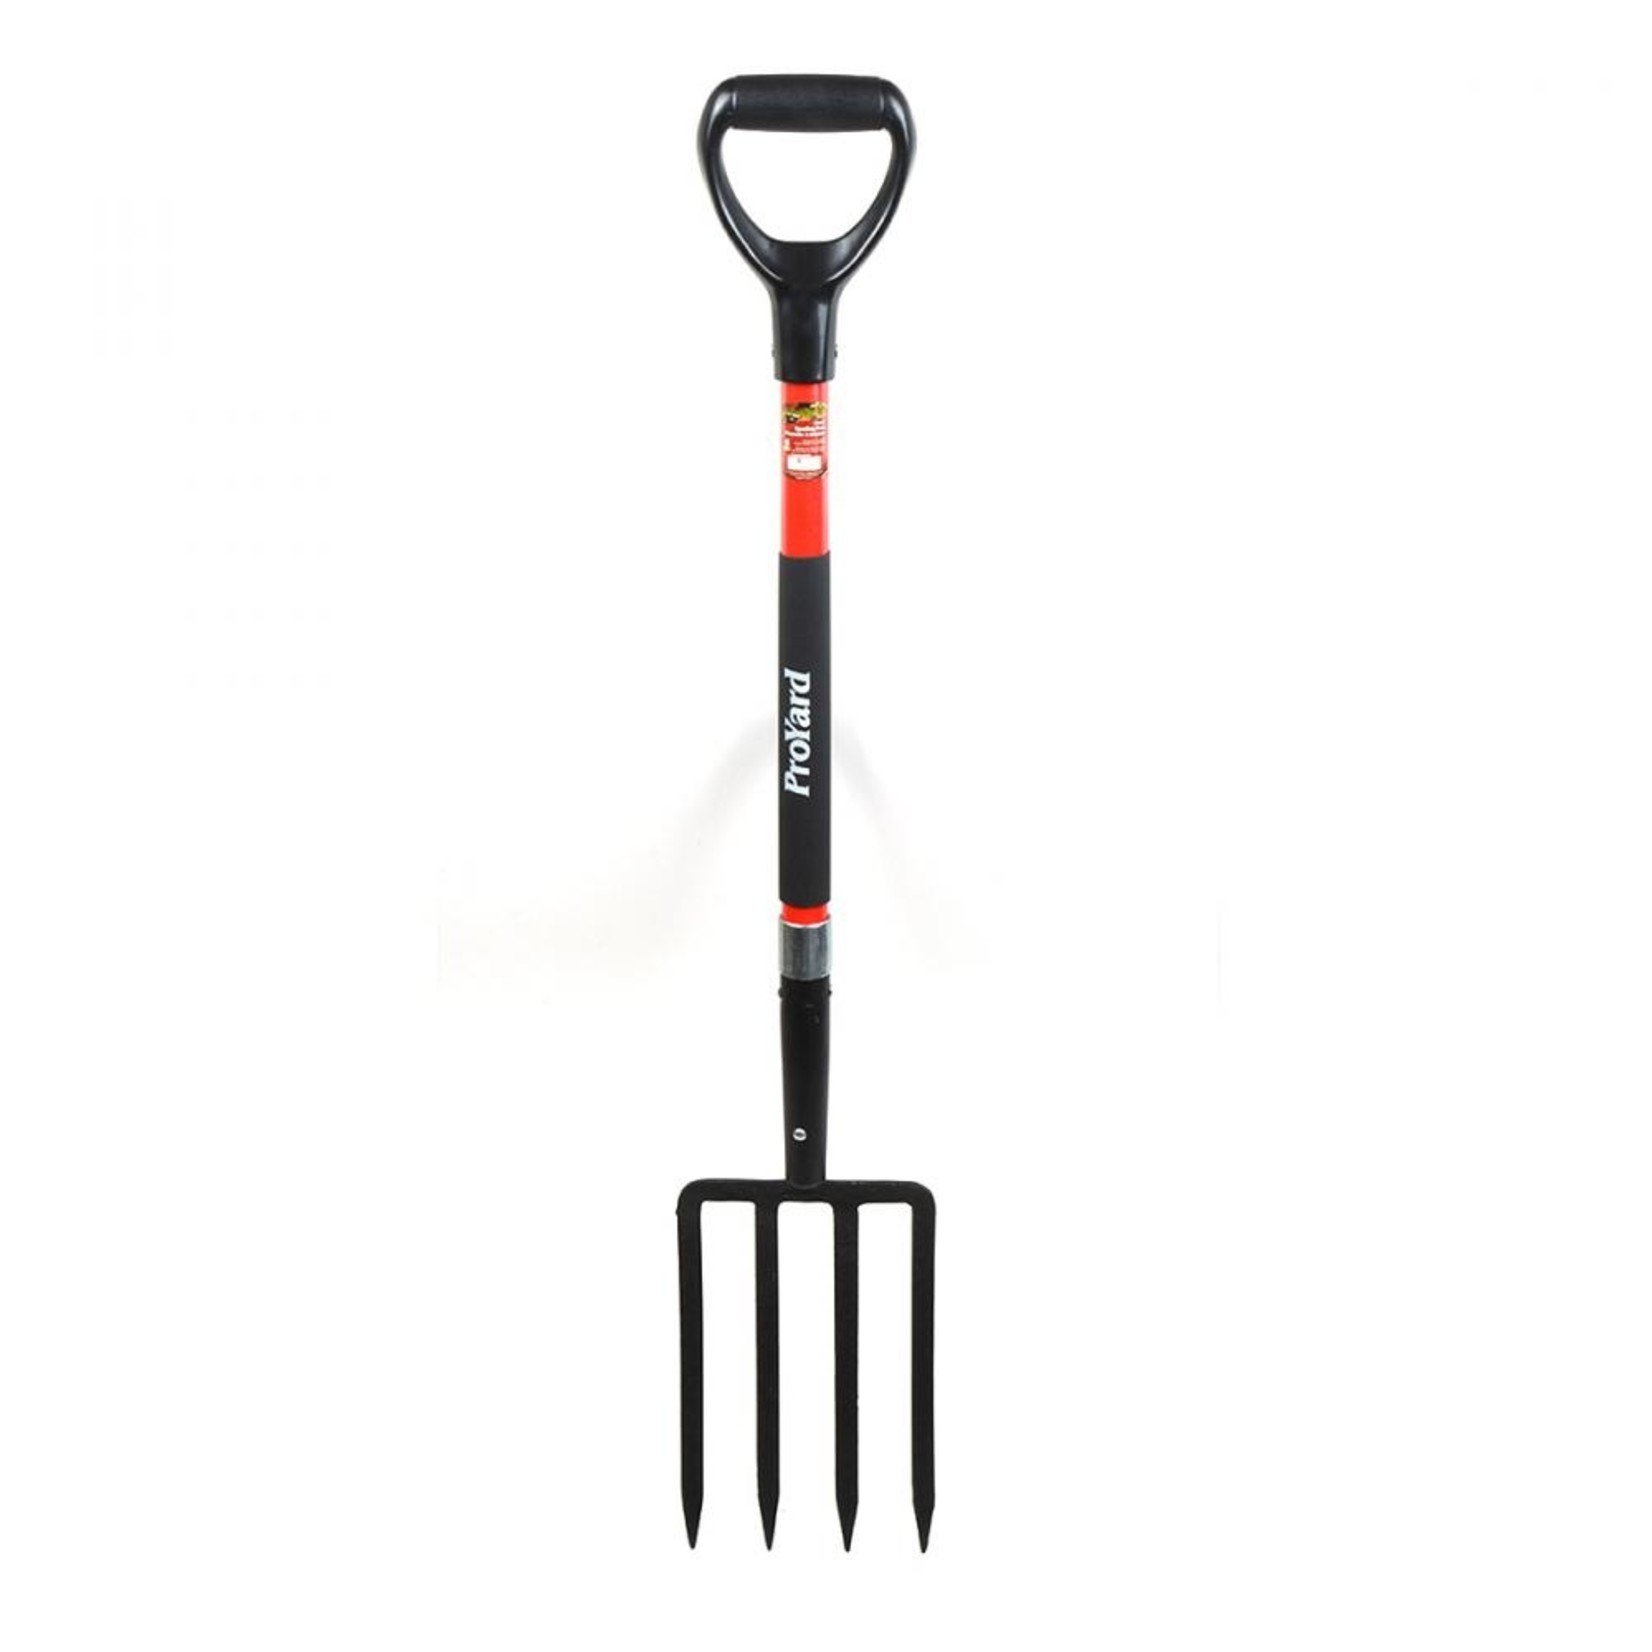 Toolway Spading Fork 4 Tines Fiberglass D-Handle 41"